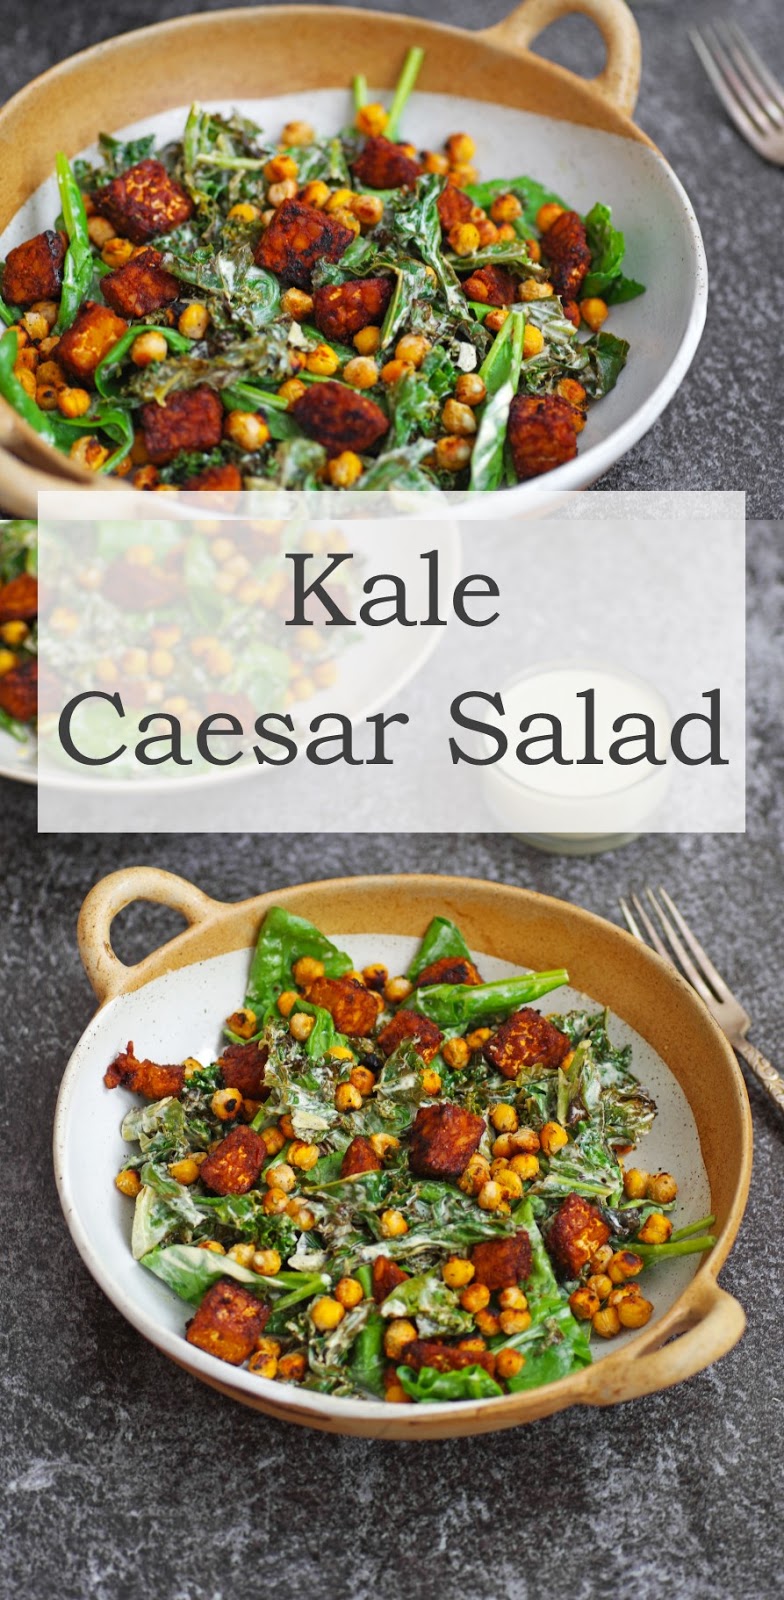 Kale Caesar Salad |Euphoric Vegan